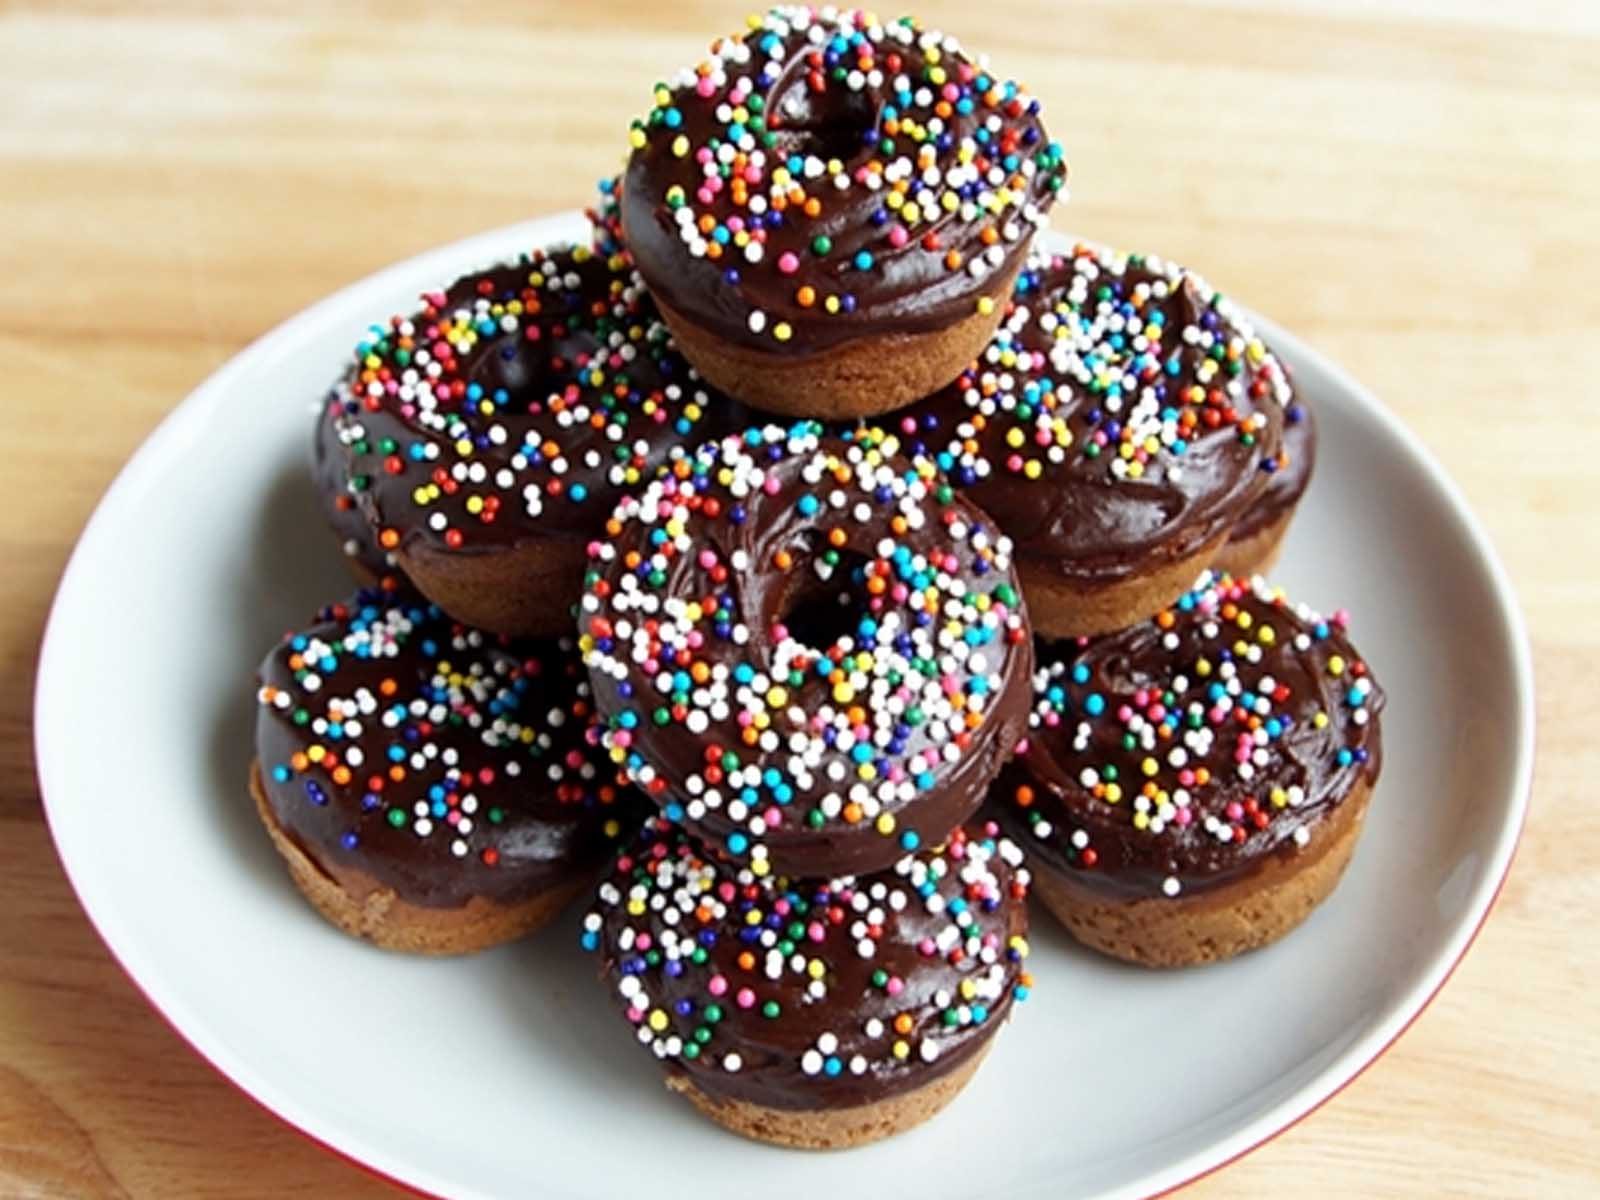 Chocolate Donuts Recipe: ਚਾਕਲੇਟ ਡੋਨਟਸ ਦਾ ਸਵਾਦ ਬੱਚਿਆ ਦੇ ਚਿਹਰੇ ਤੇ ਲਿਆਵੇਗਾ ਮੁਸਕਾਰ, ਇੰਝ ਕਰੋ ਤਿਆਰ 